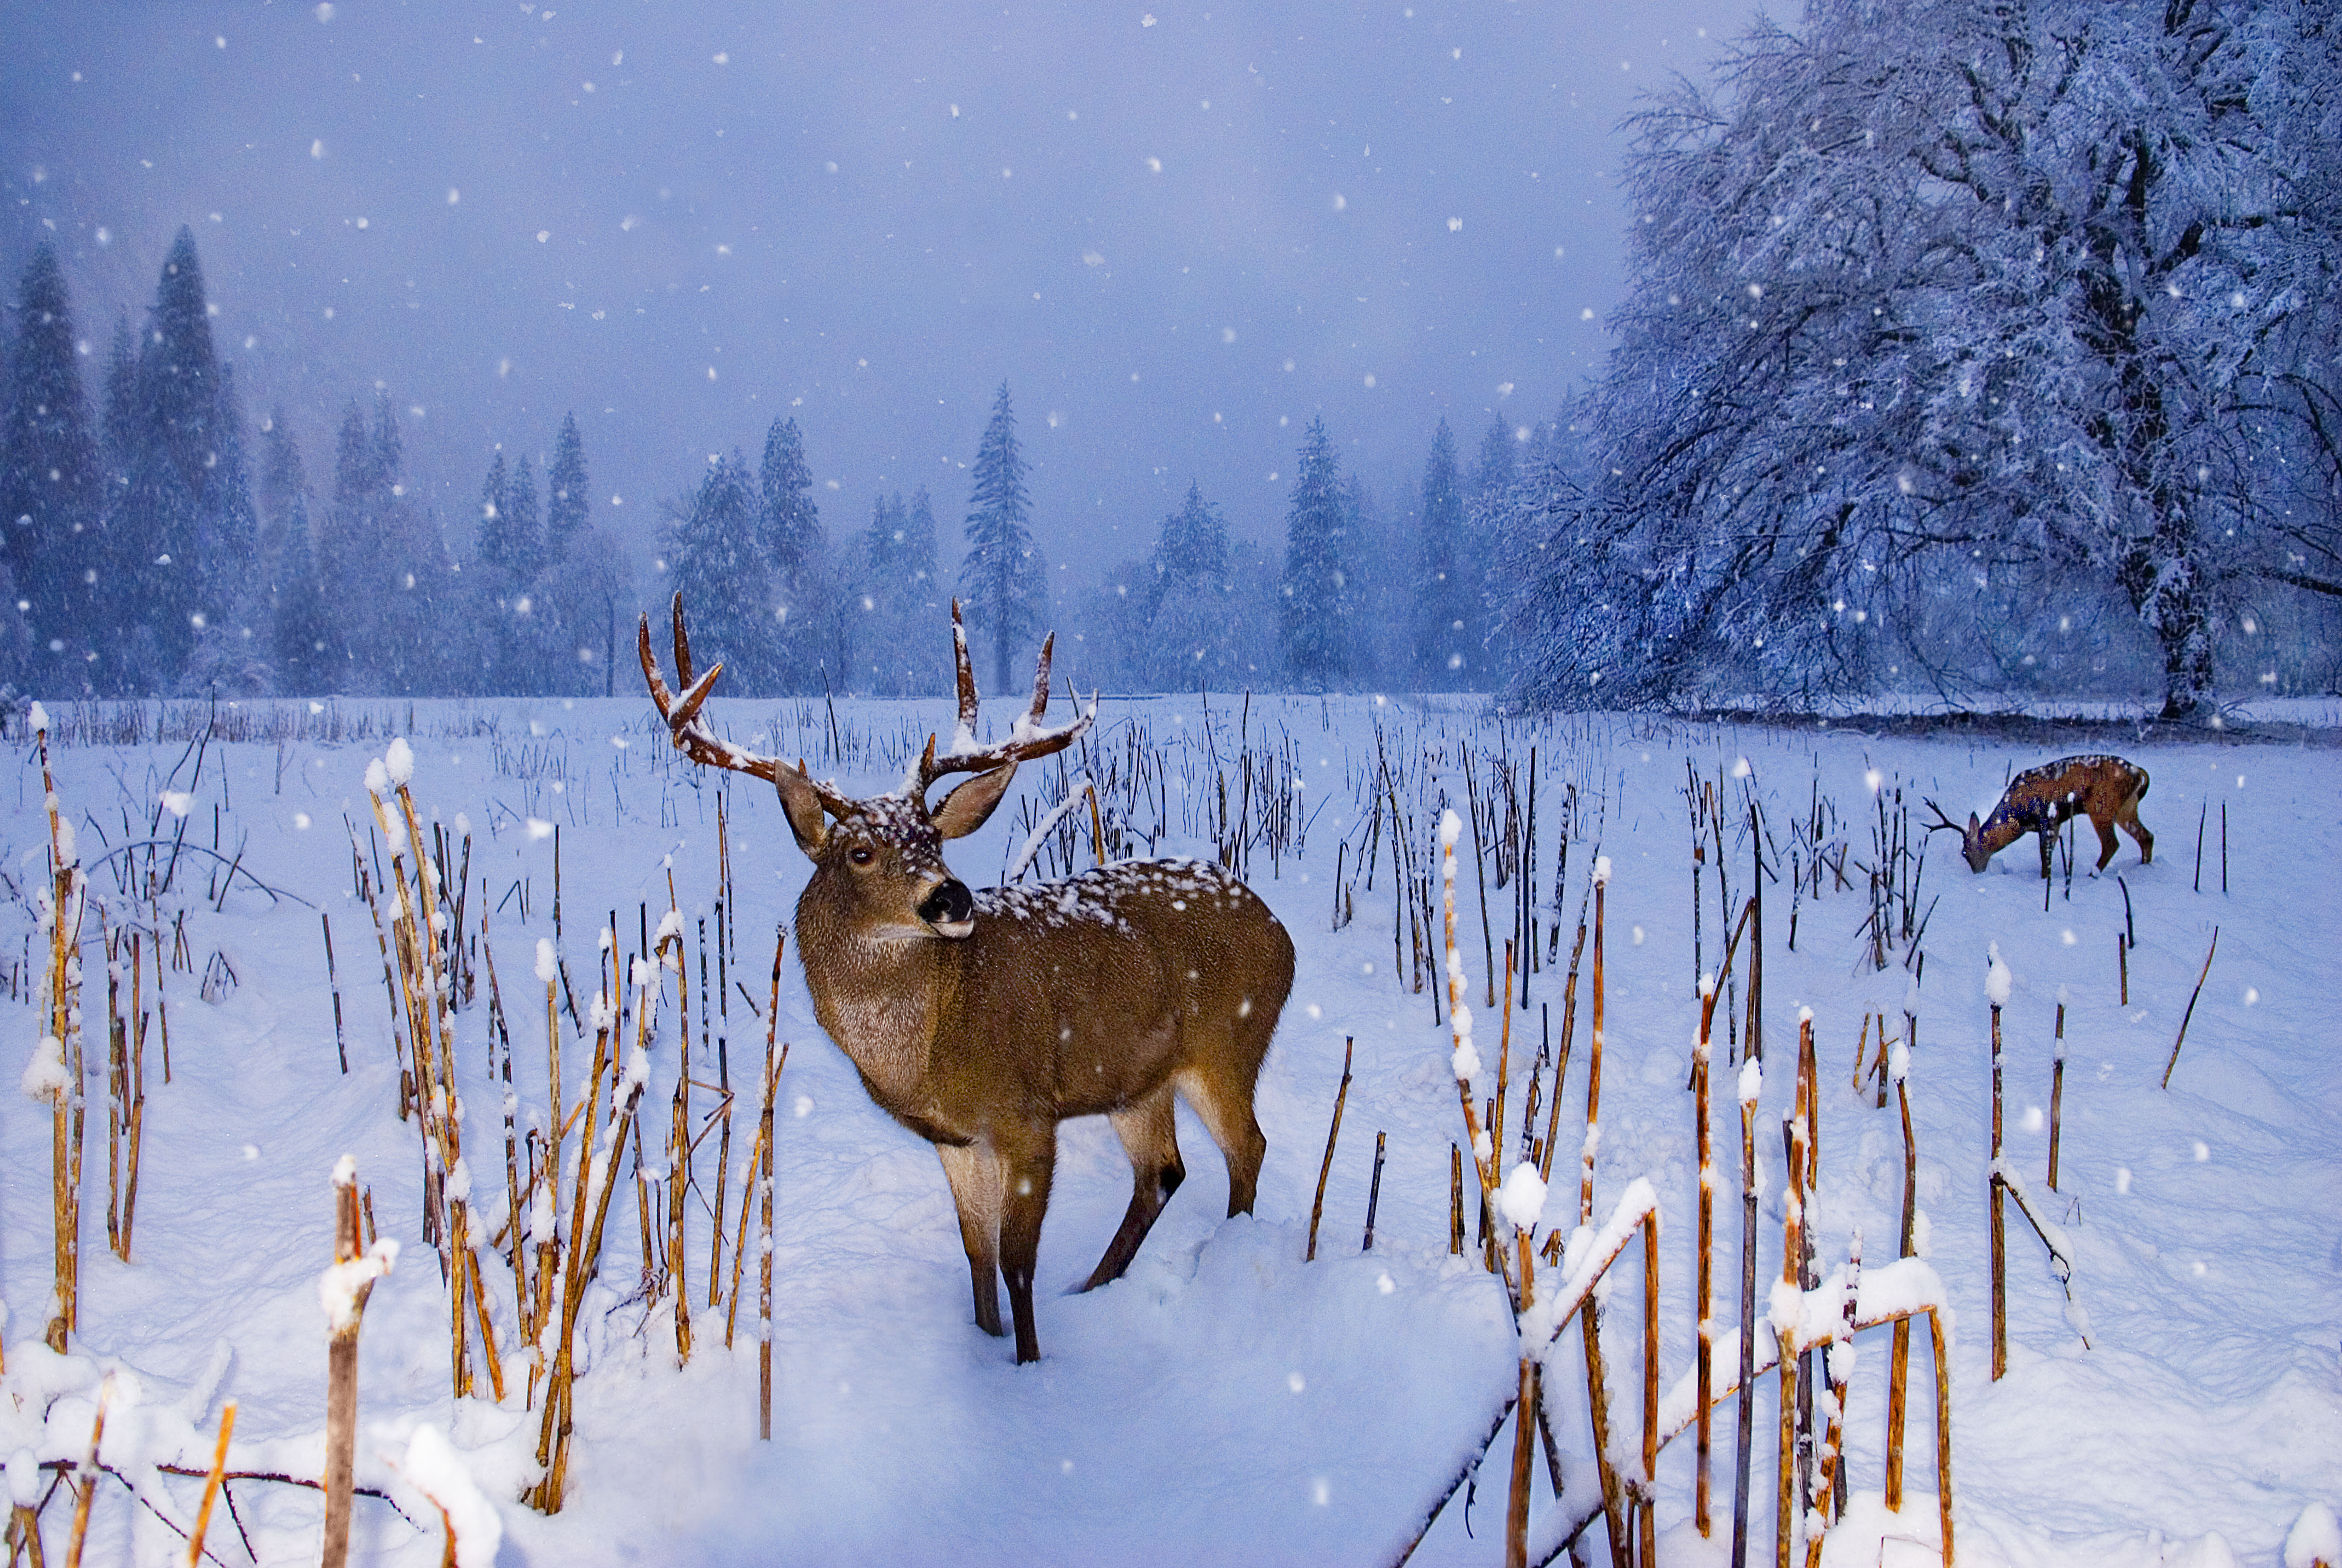 Snowfall, Wildlife and Gardens - The National Wildlife Federation Blog